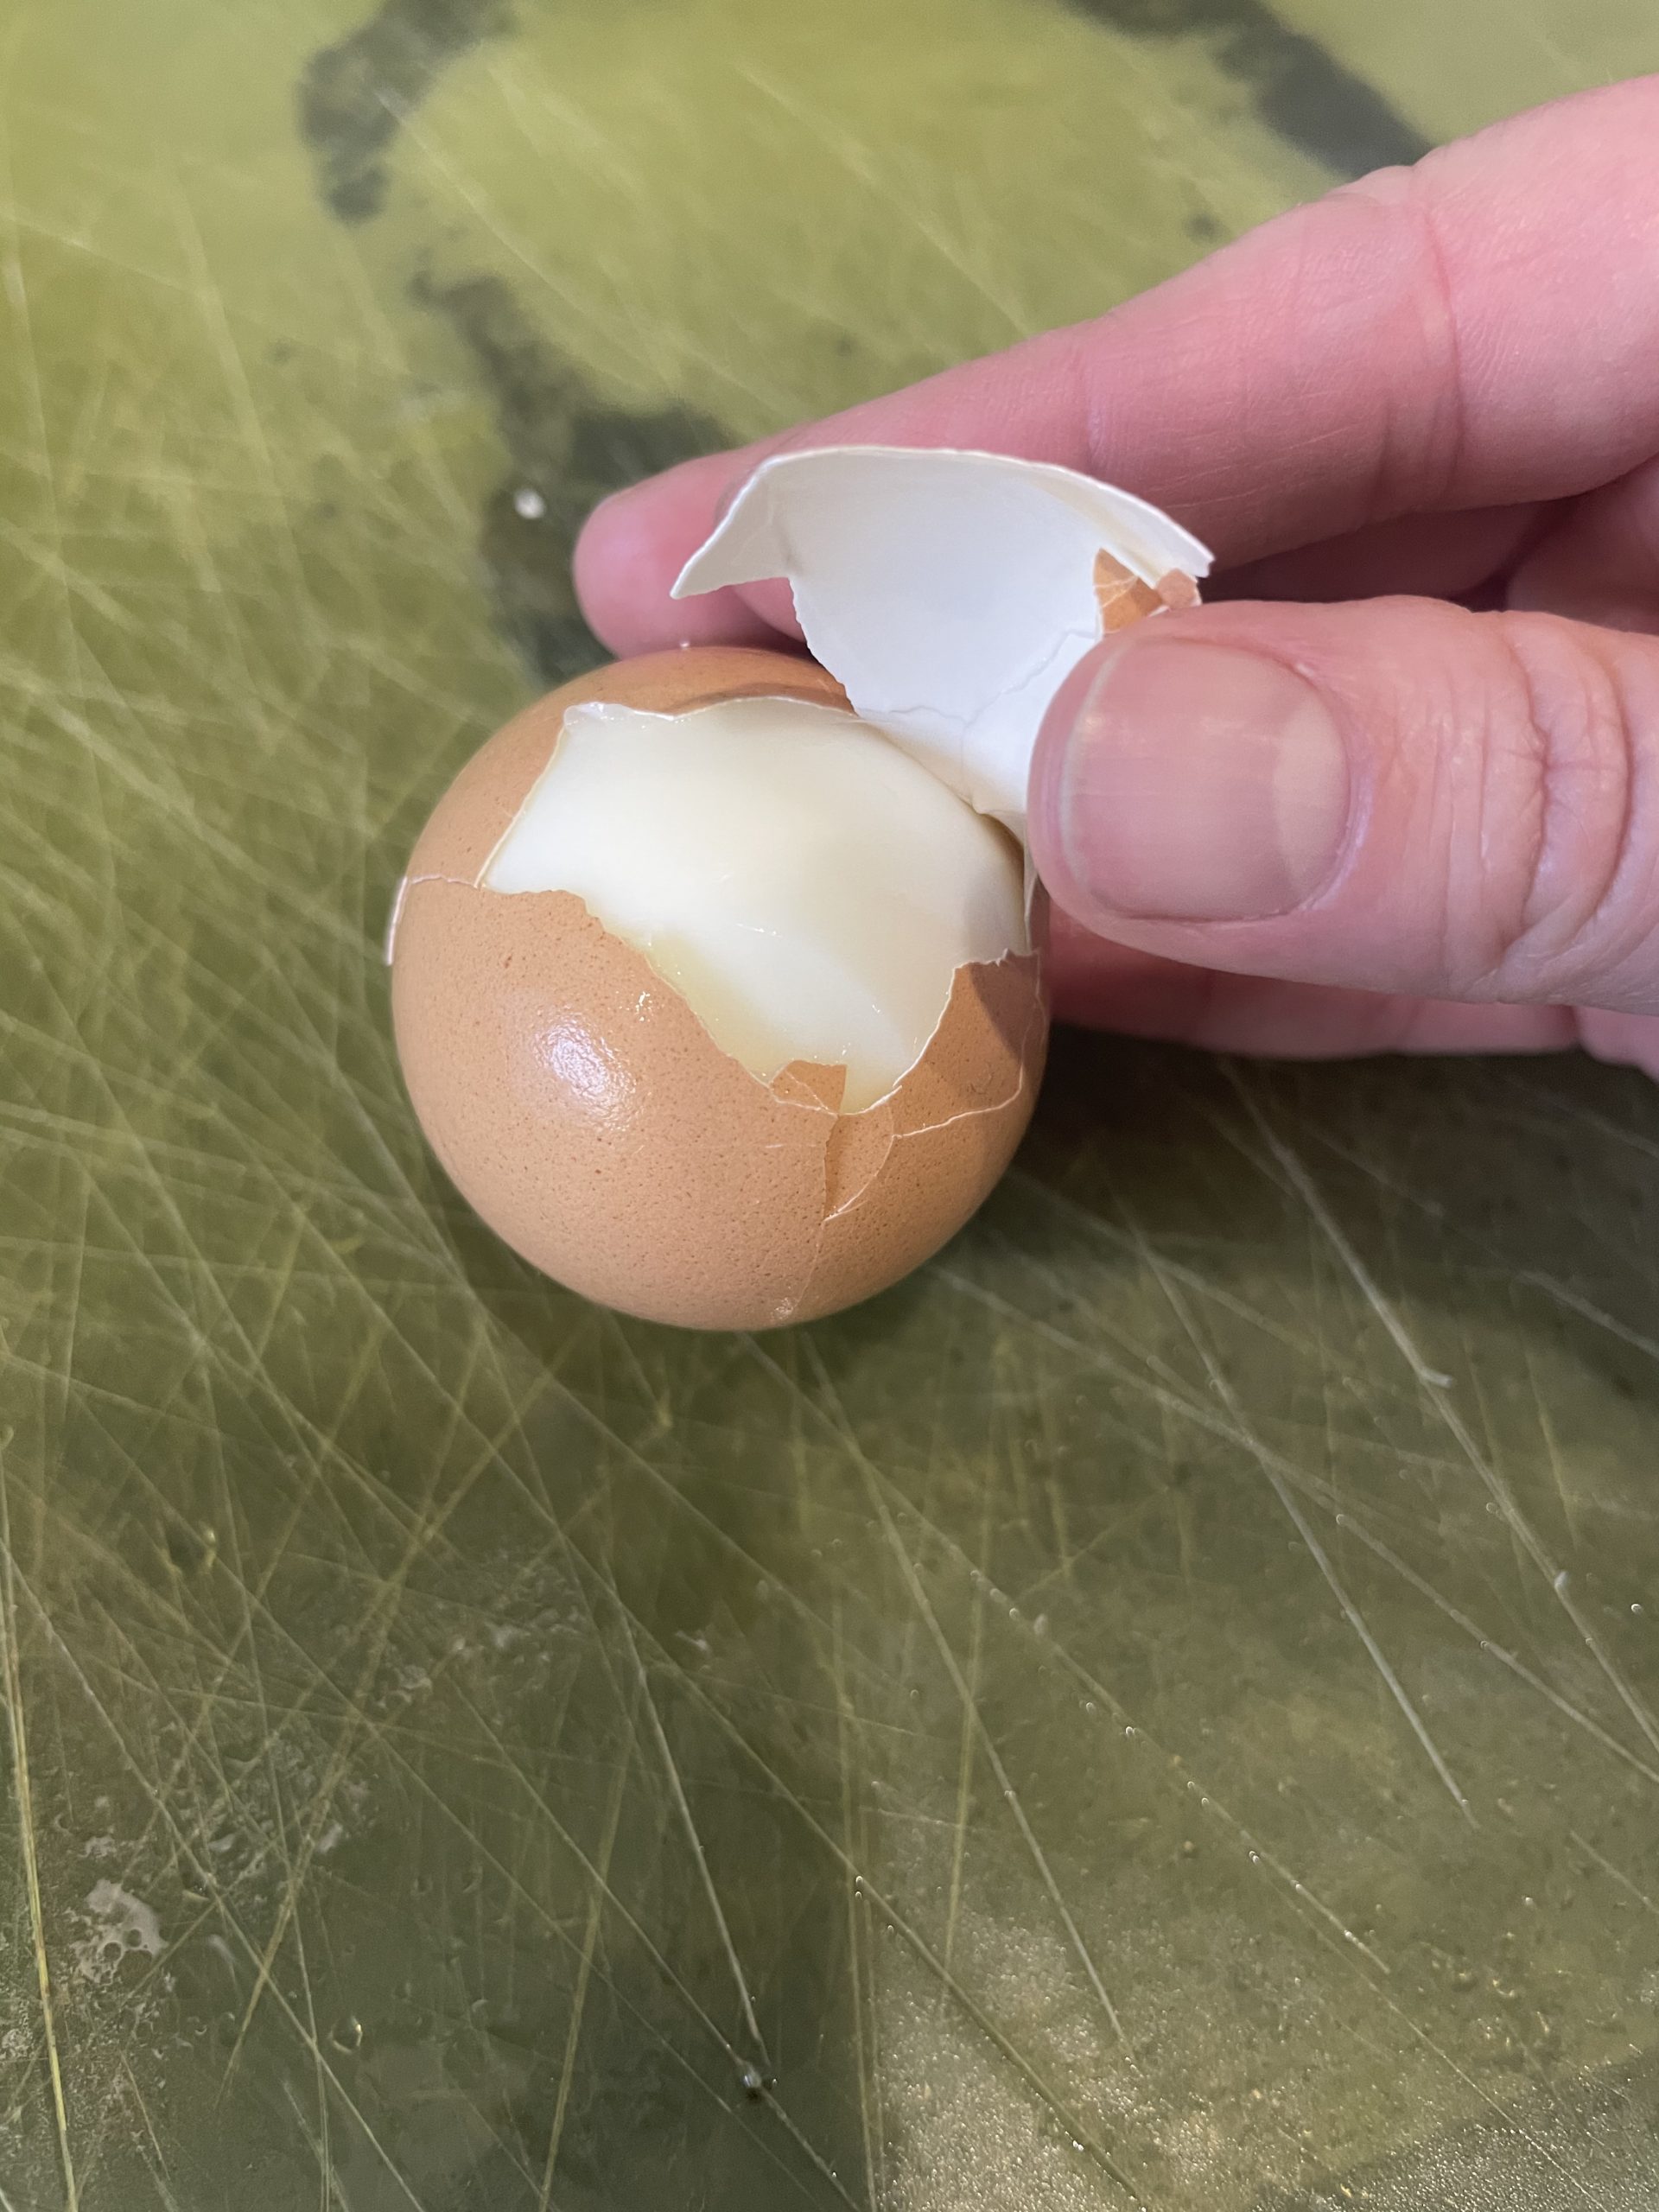 Peeling eggs perfectly